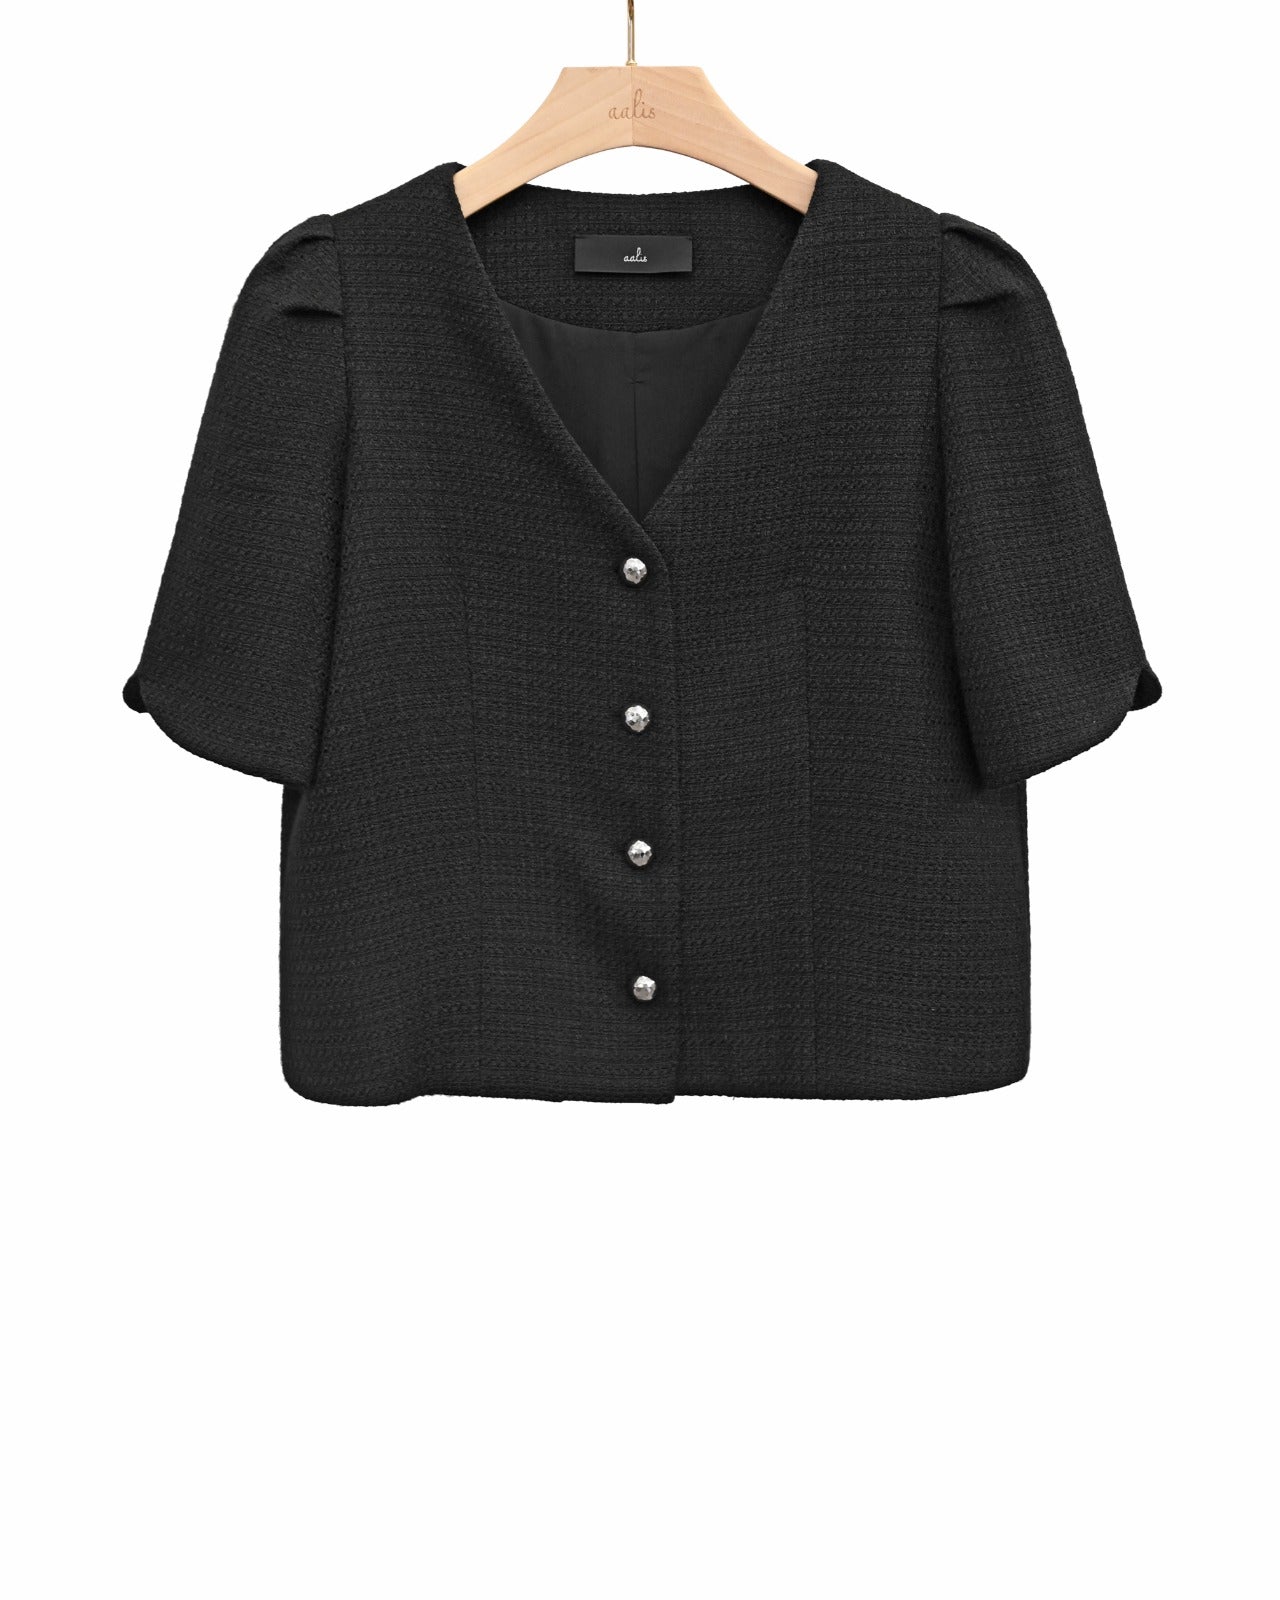 aalis POLL v neck tweed jacket (Black)